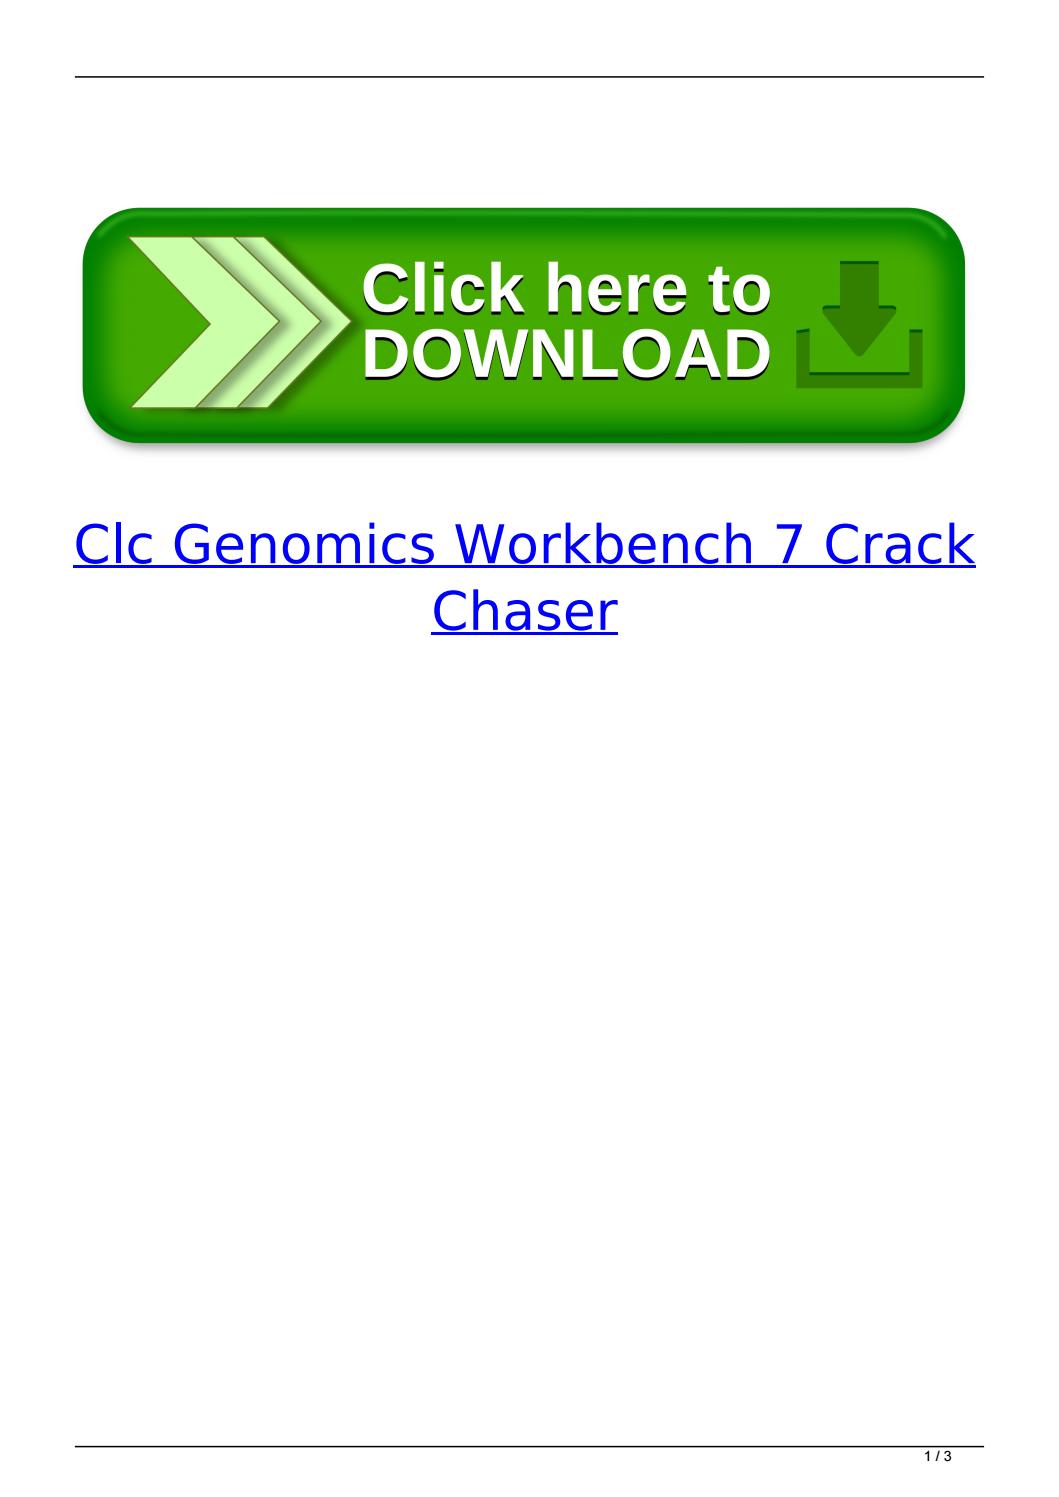 clc genomics workbench free download